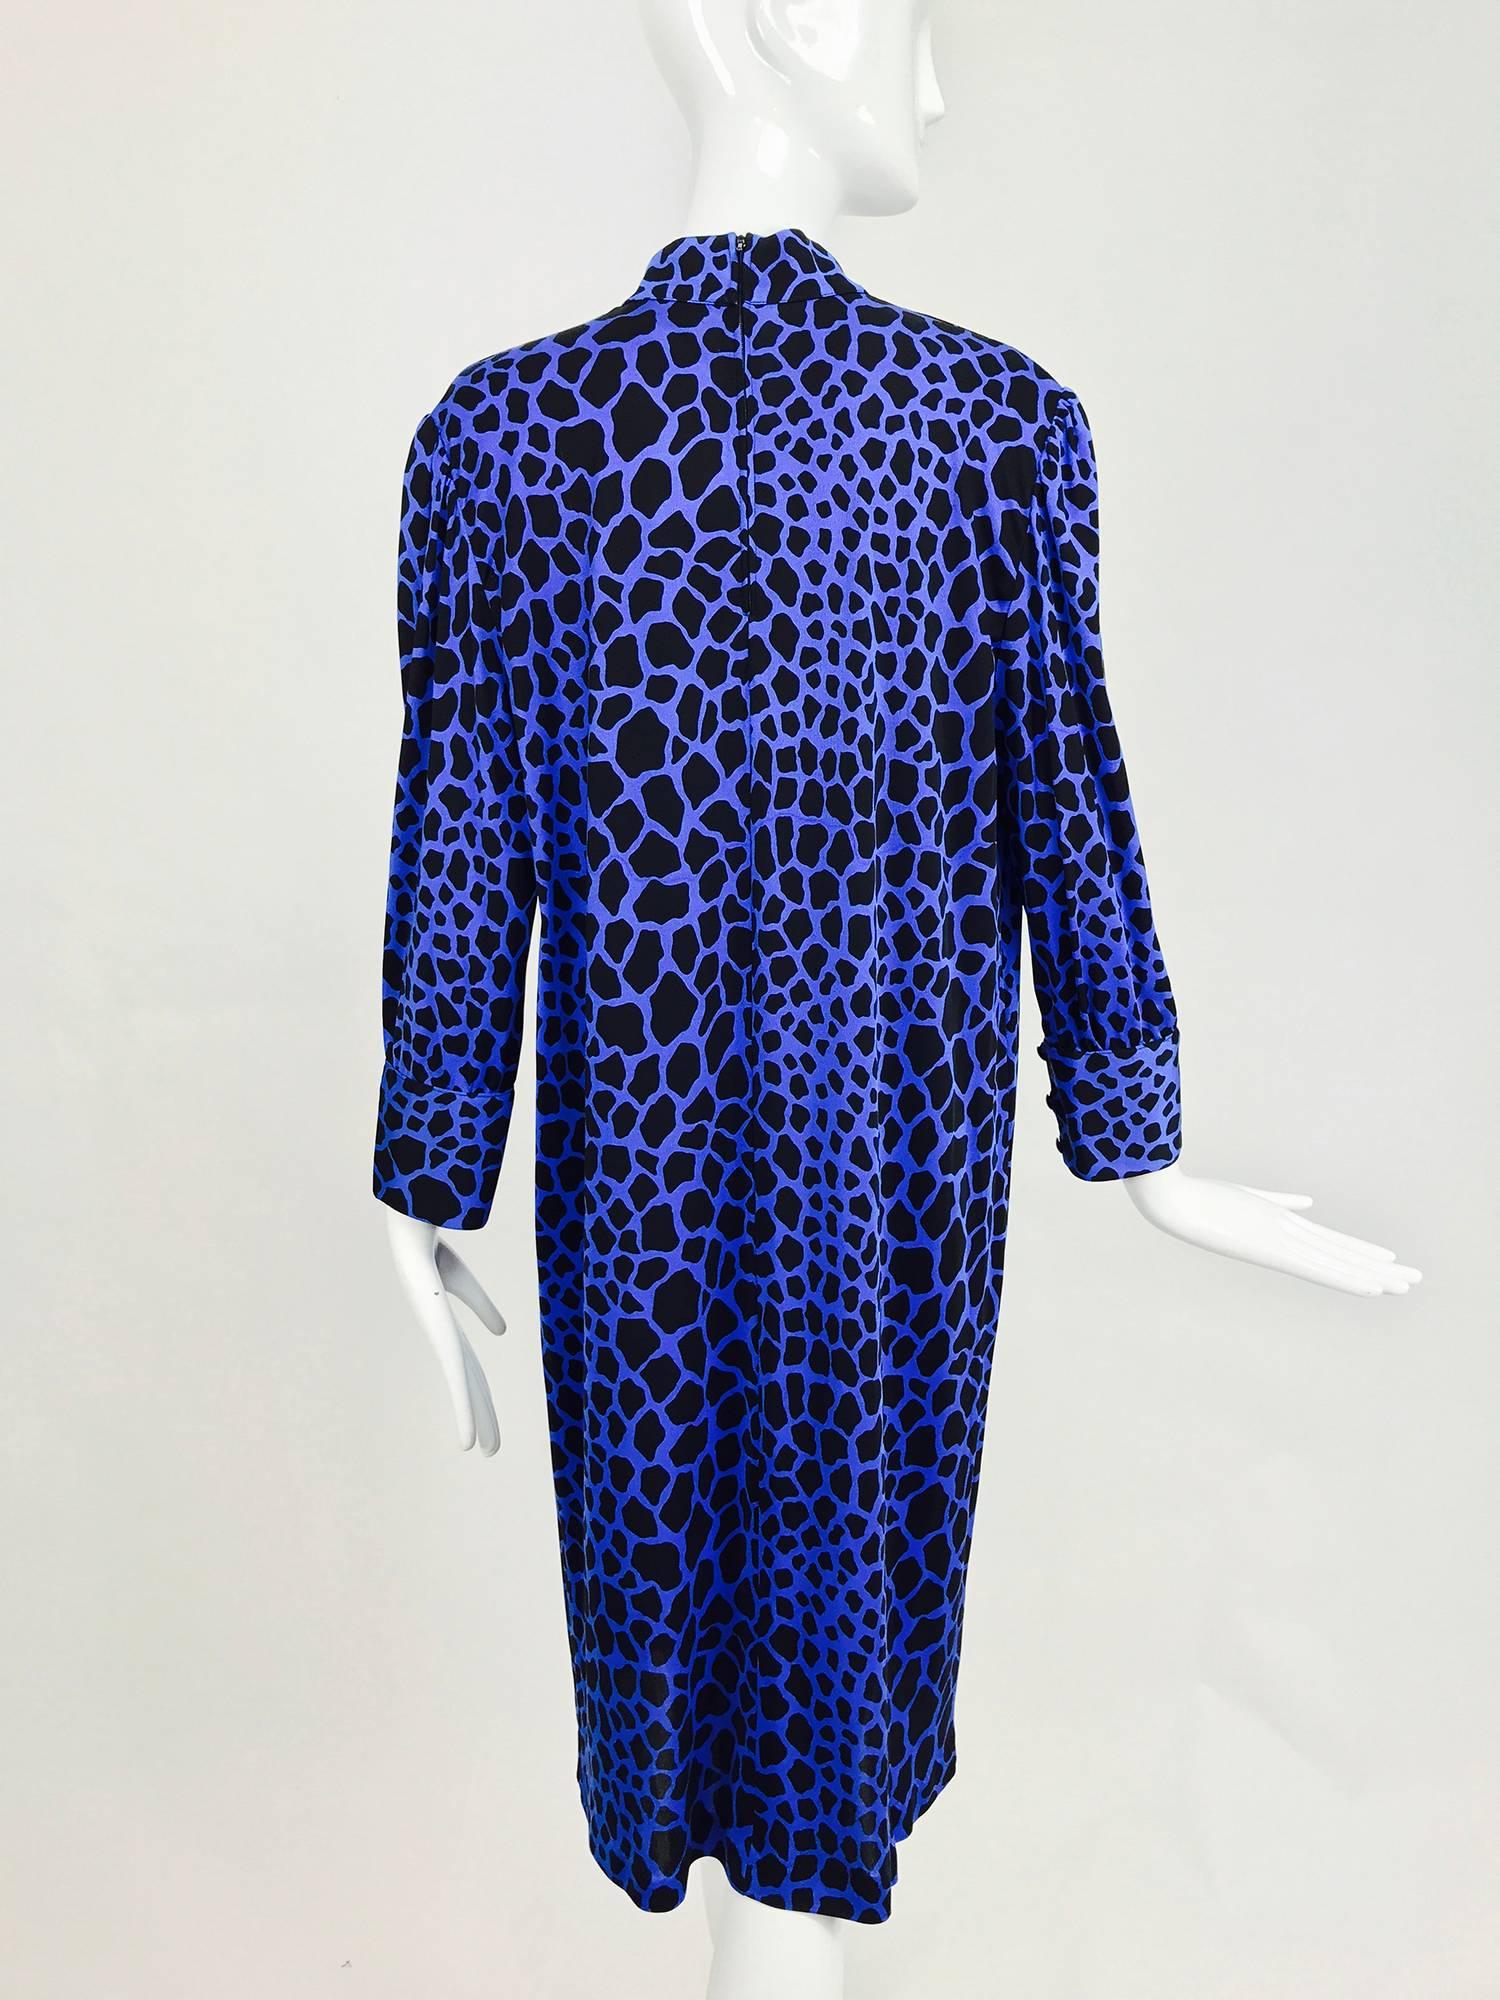 Women's Vintage Gibi, Roma silk jersey leopard spot dress in black and blue 1970s